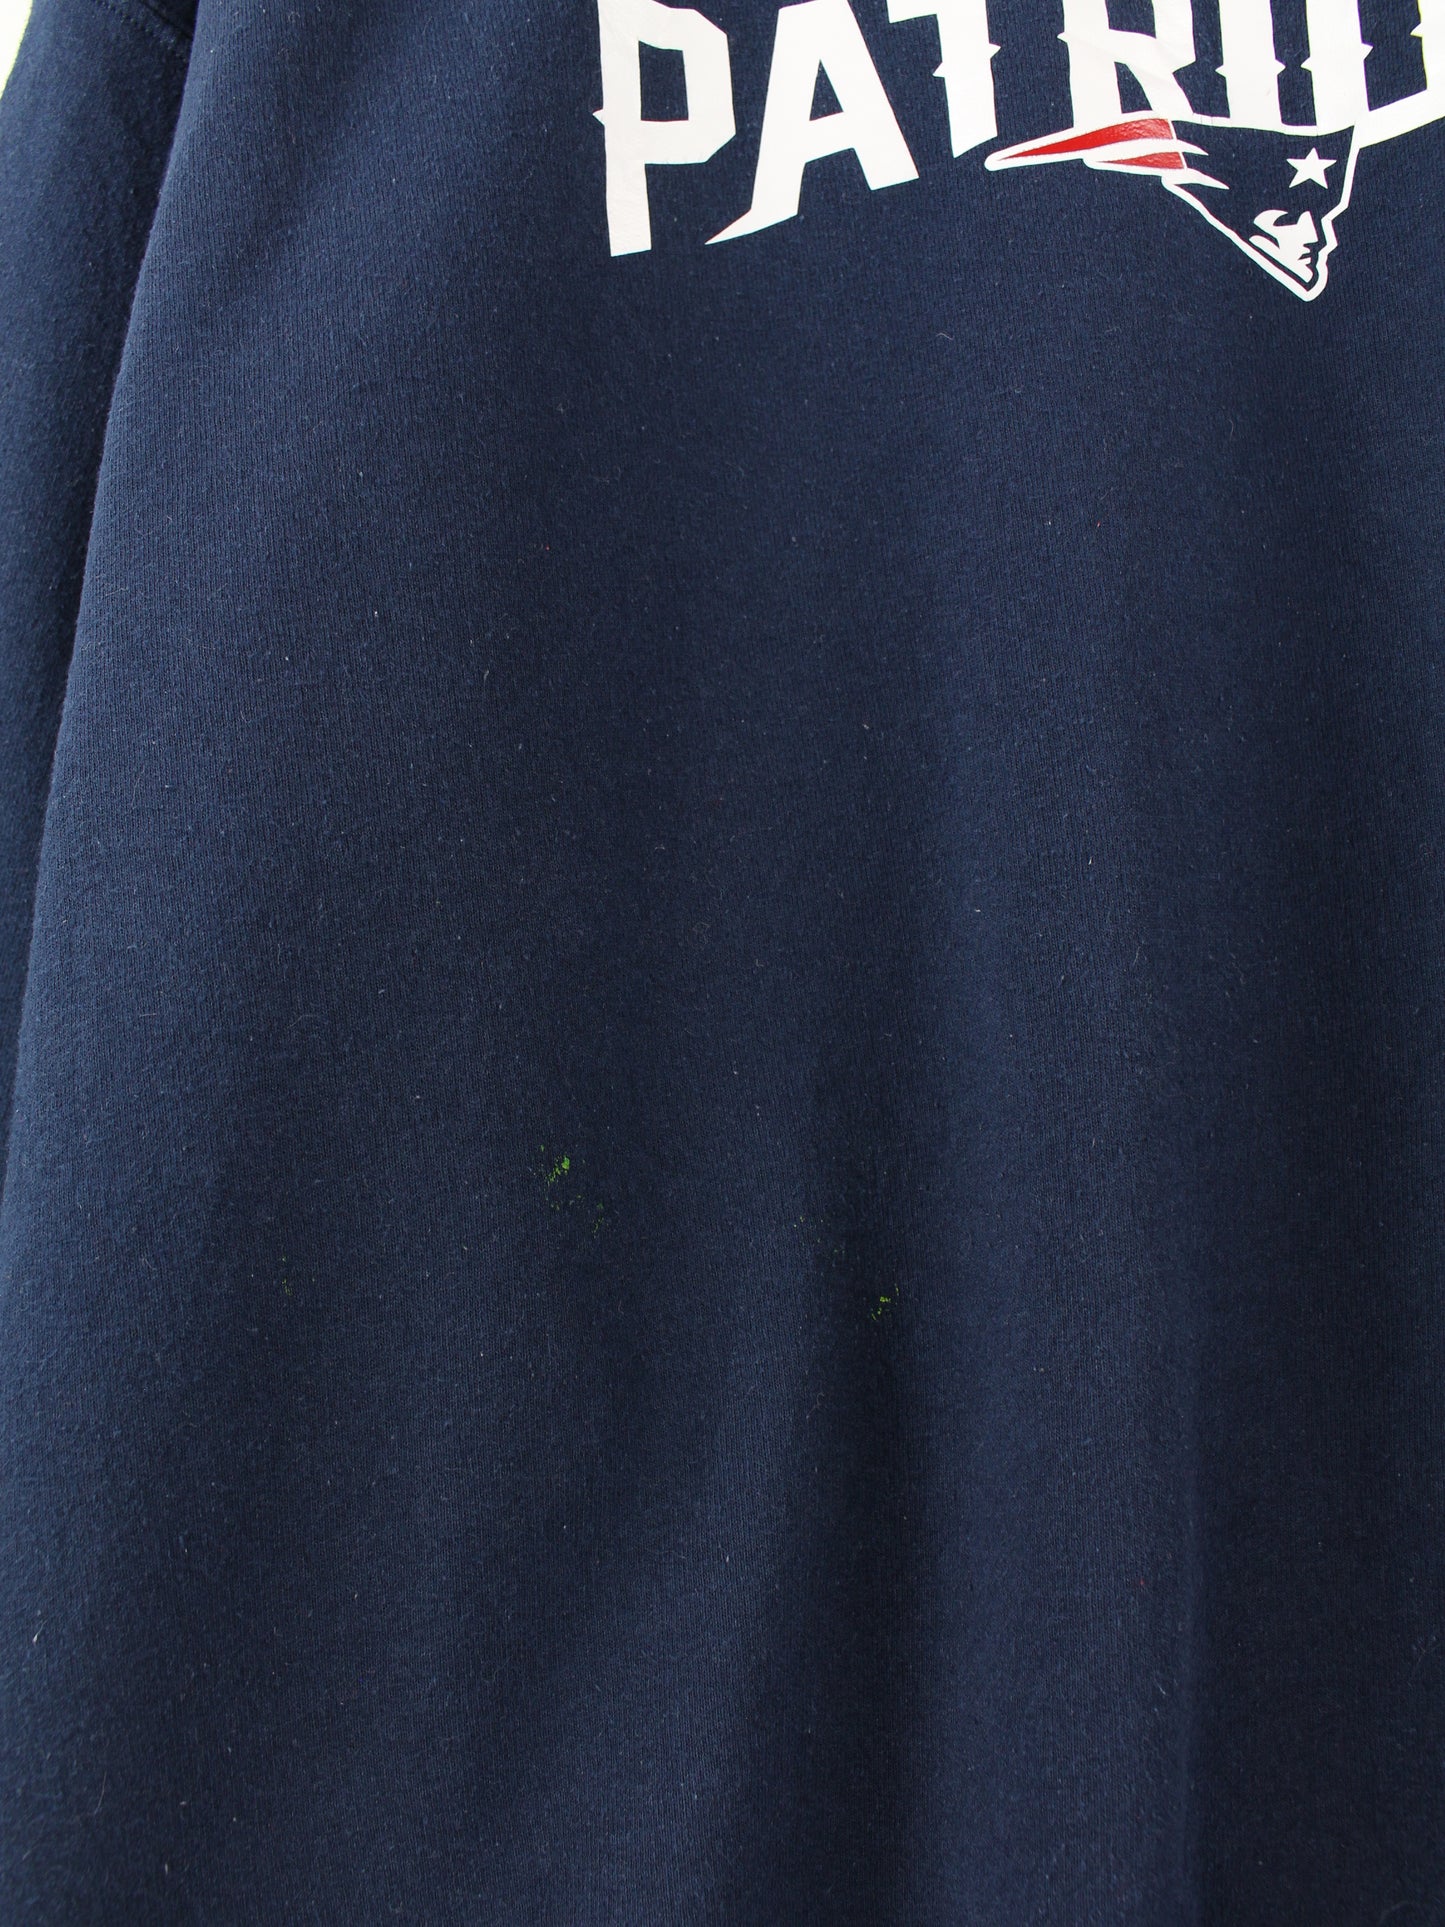 Gildan New England Patriots Sweater Blue XL